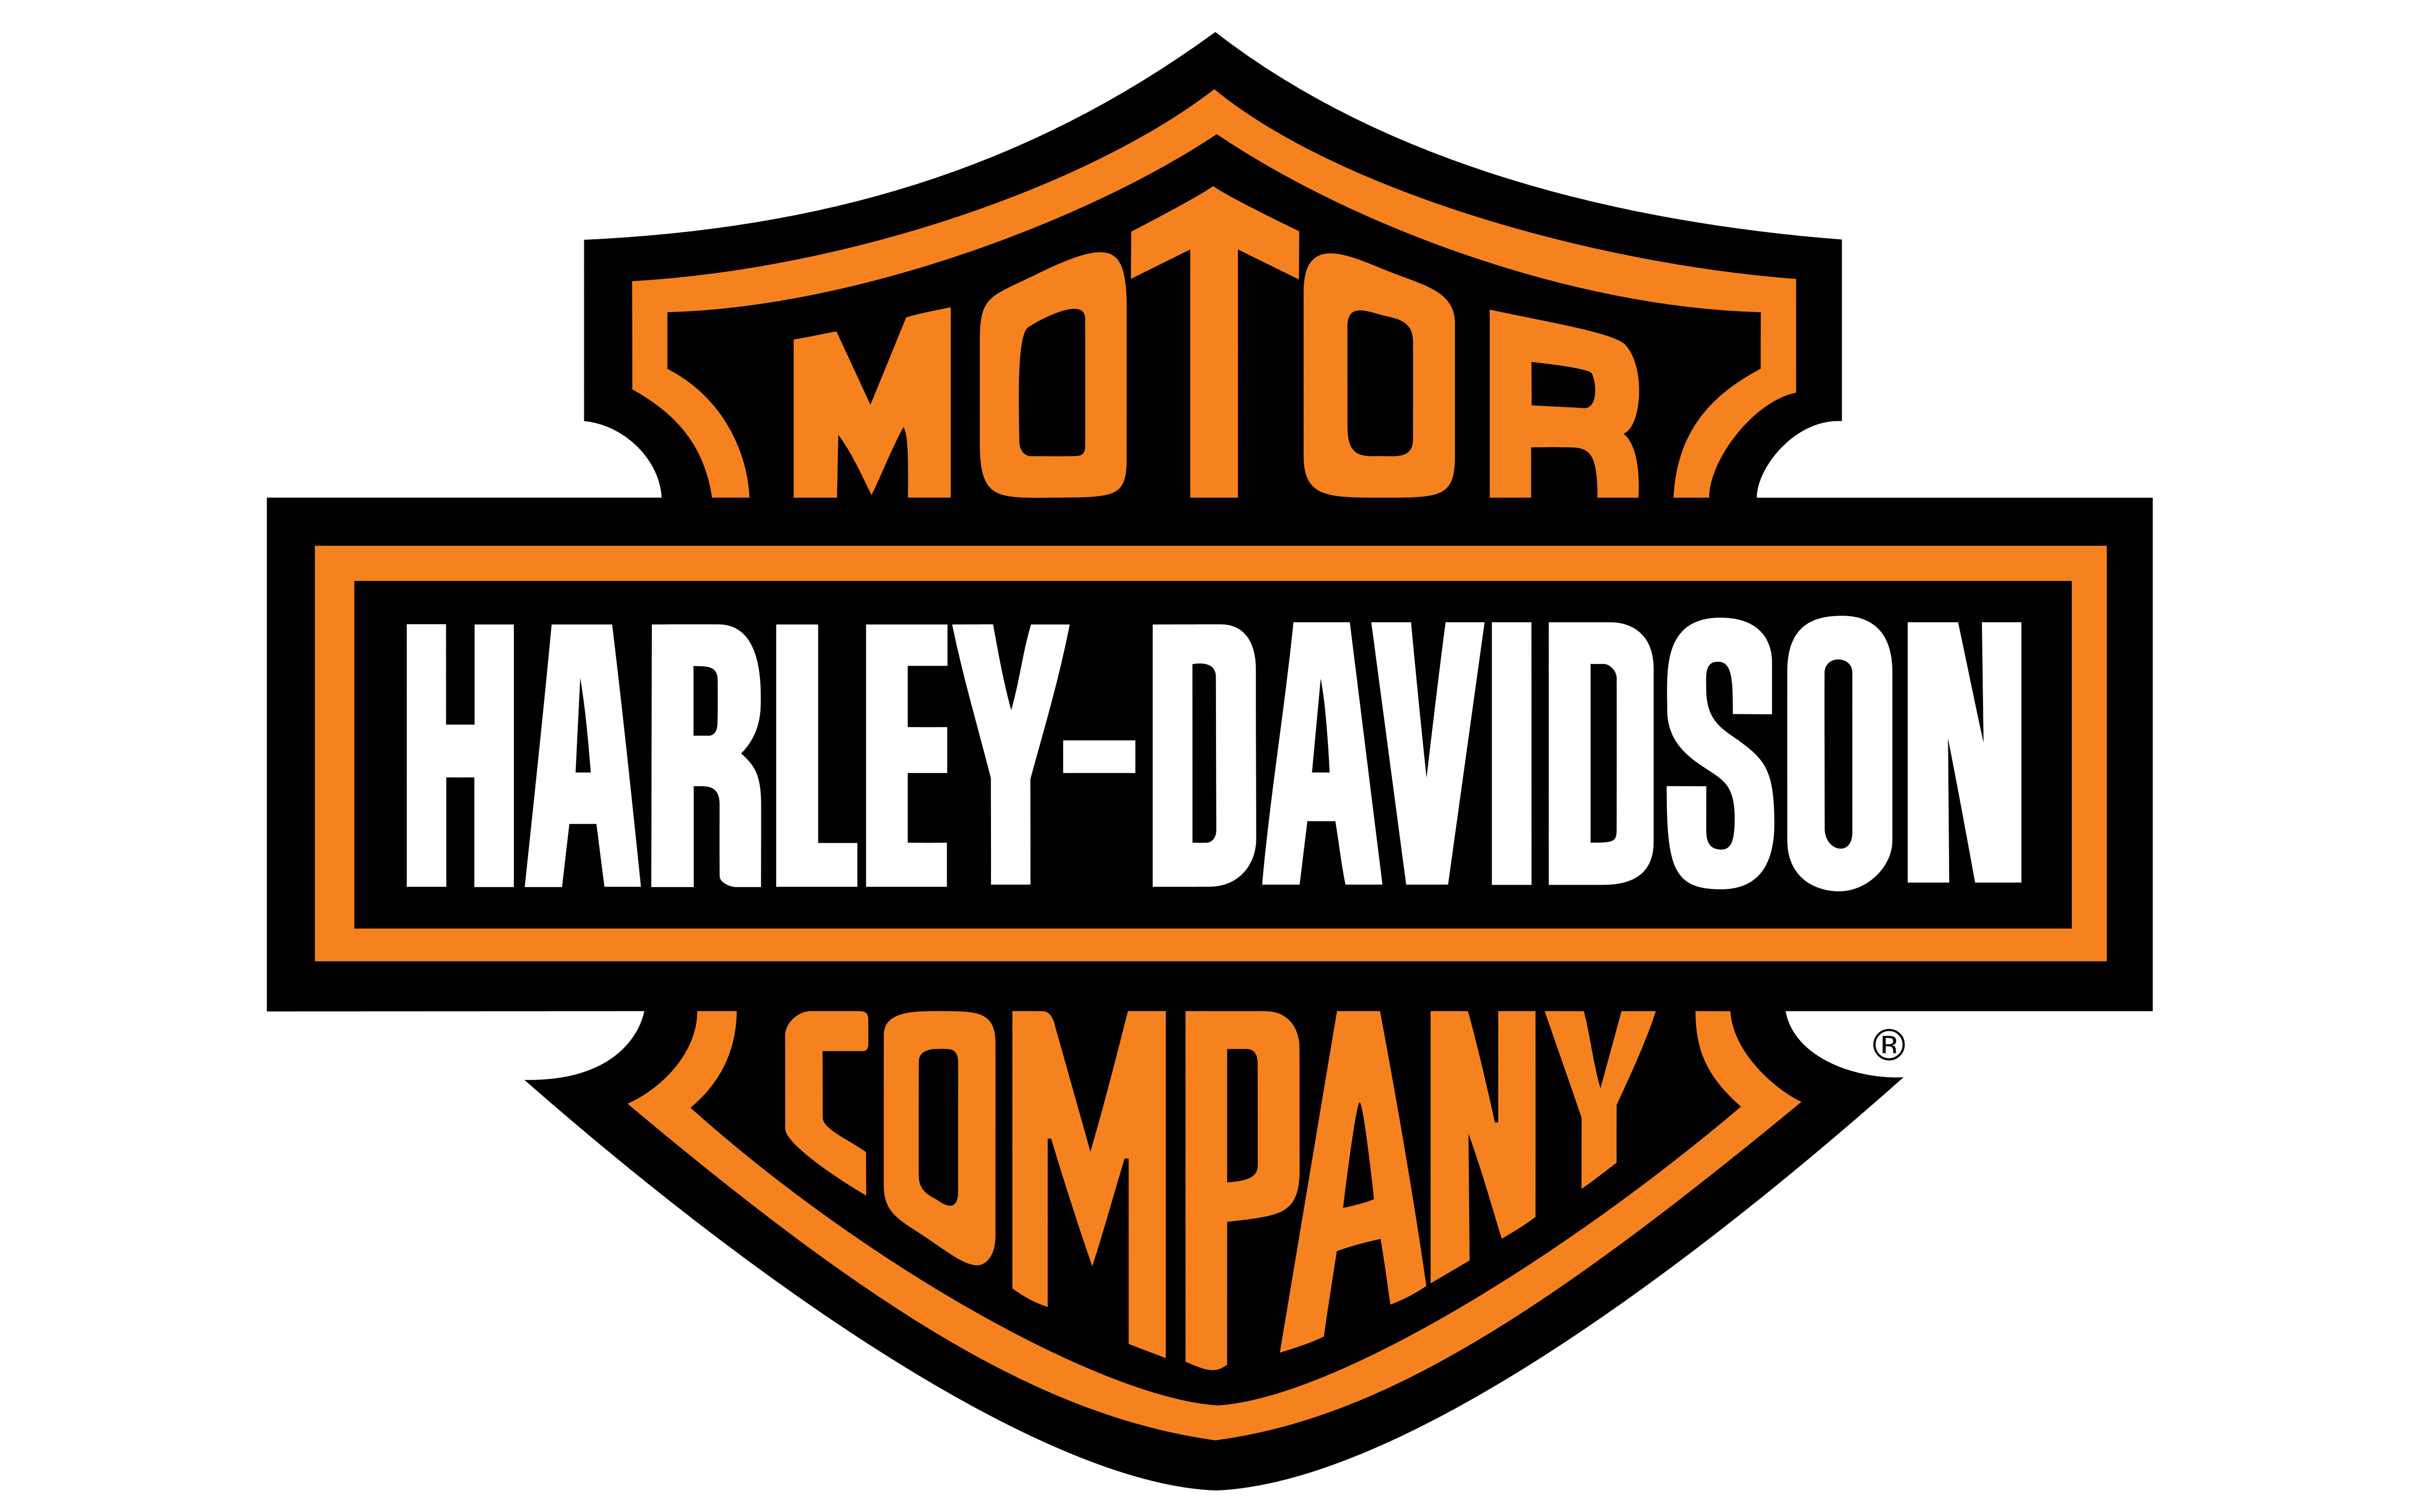 UU. Harley Davidson 20x30 cm chapa escudo 750er disparé escudo sign signs EE 